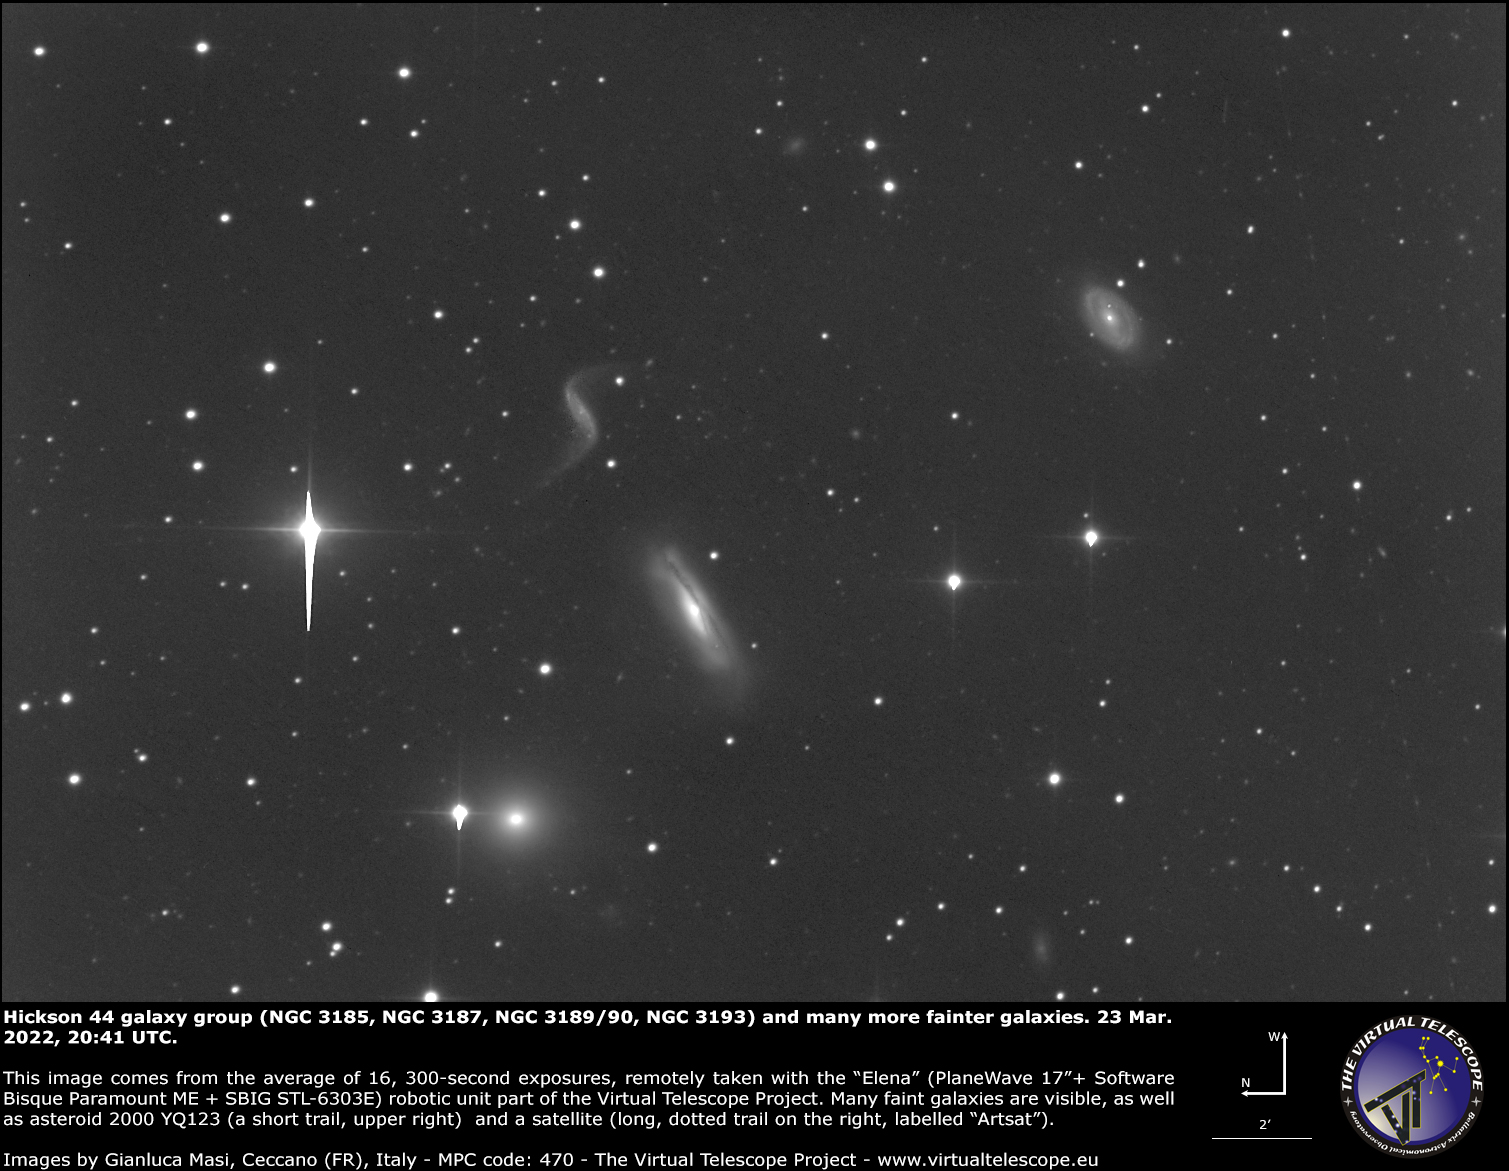 Galaxies NGC 3185, NGC 3187, NGC 3189/90, NGC 3193(Hickson 44 group) and many more fainter ones. 23 Mar. 2022.